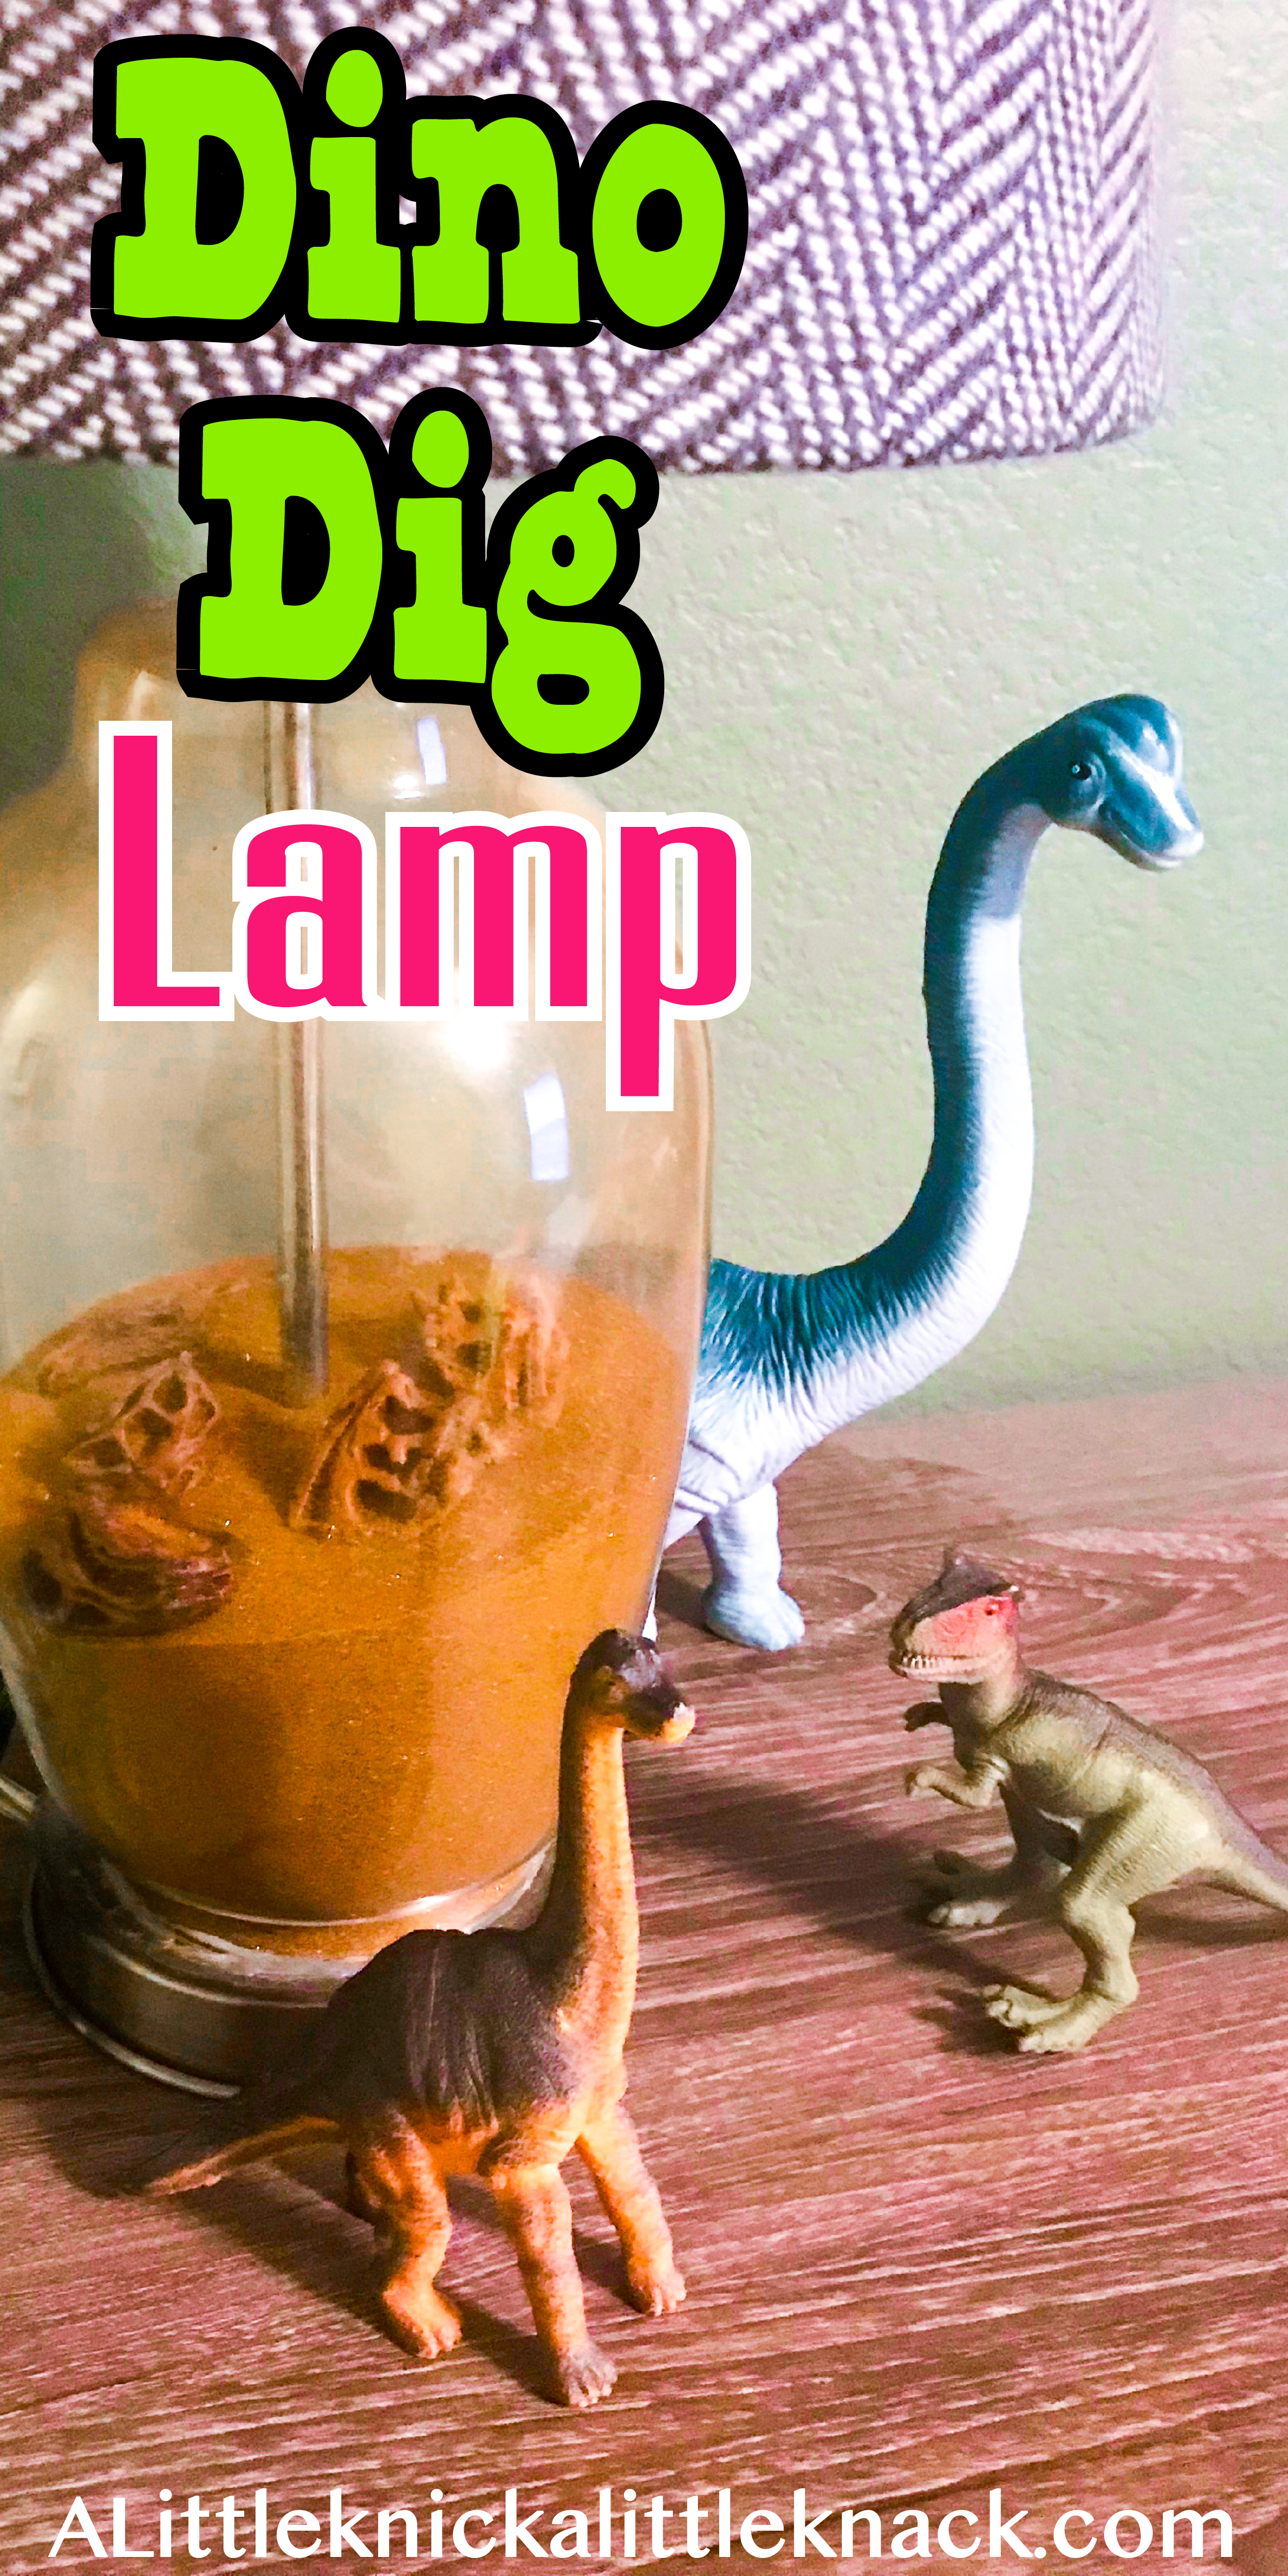 Dinosaur figurines surround a dinosaur lamp on a wooden surface. 